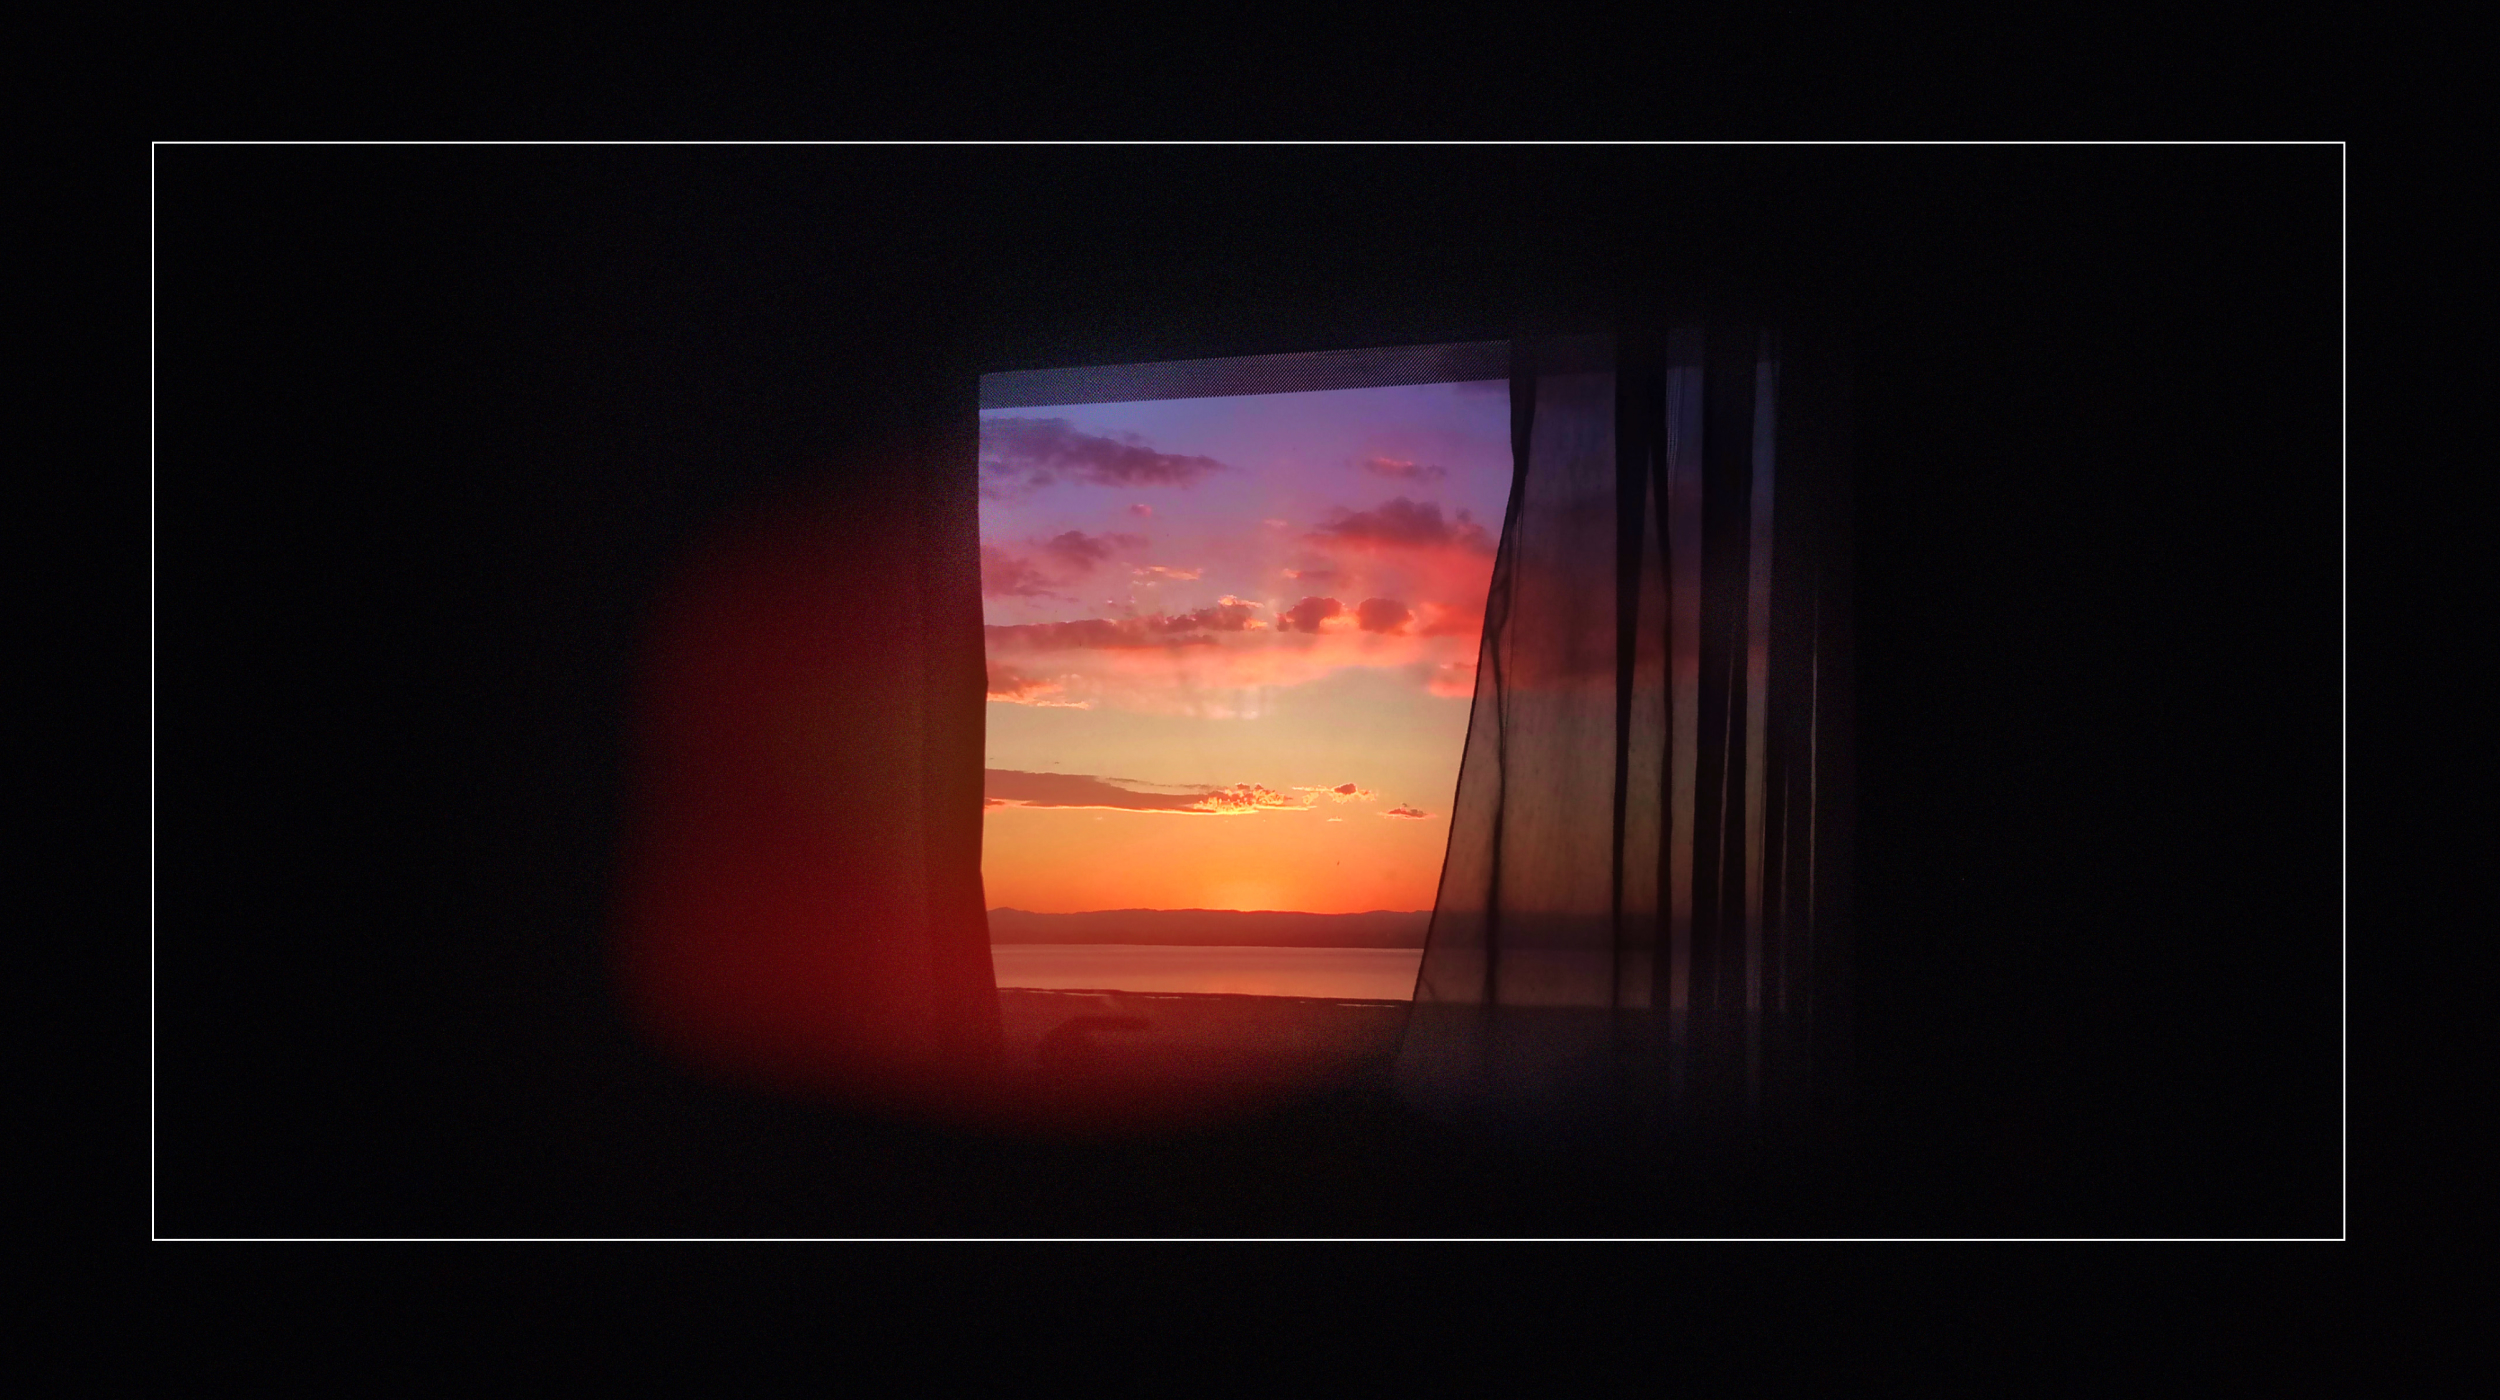 An image of a sunset through a window.